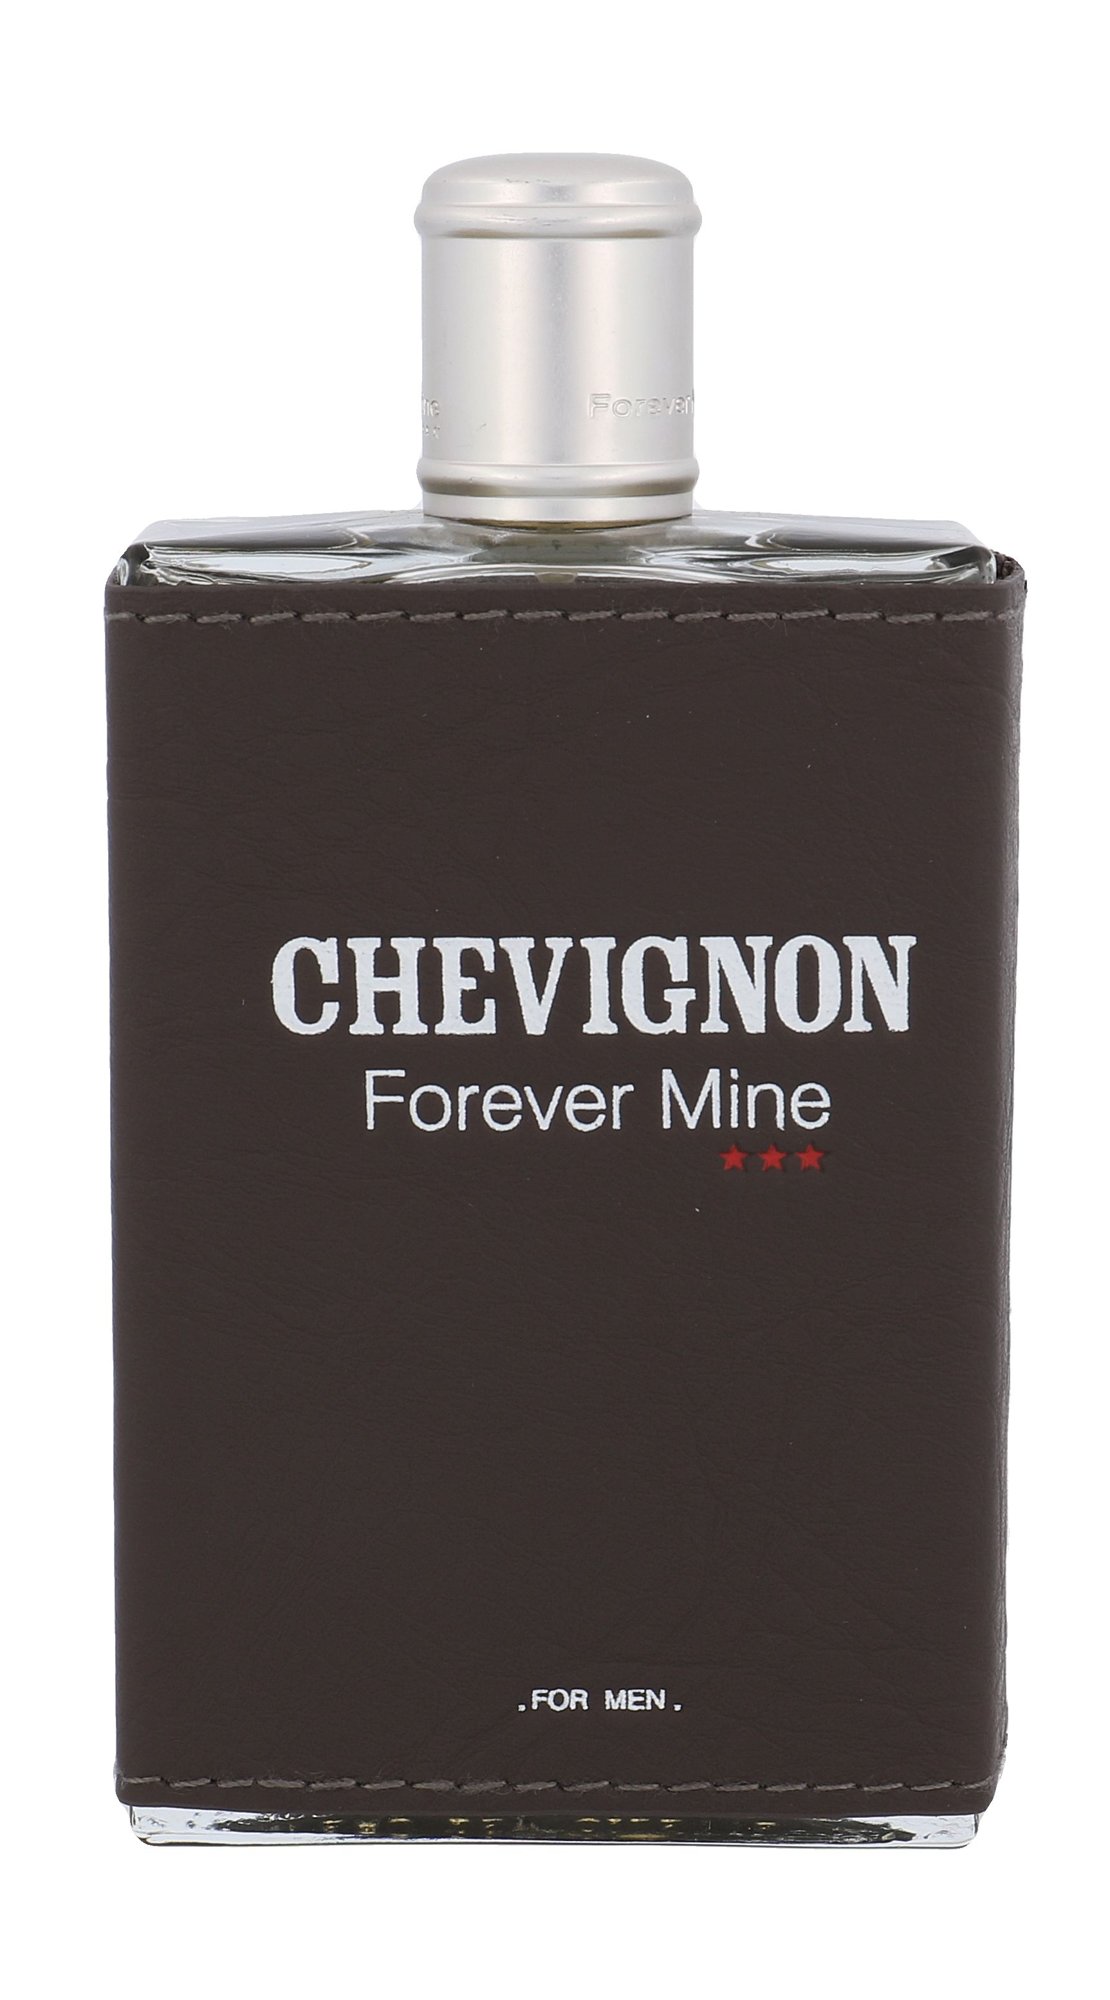 Chevignon Forever Mine 100ml vanduo po skutimosi